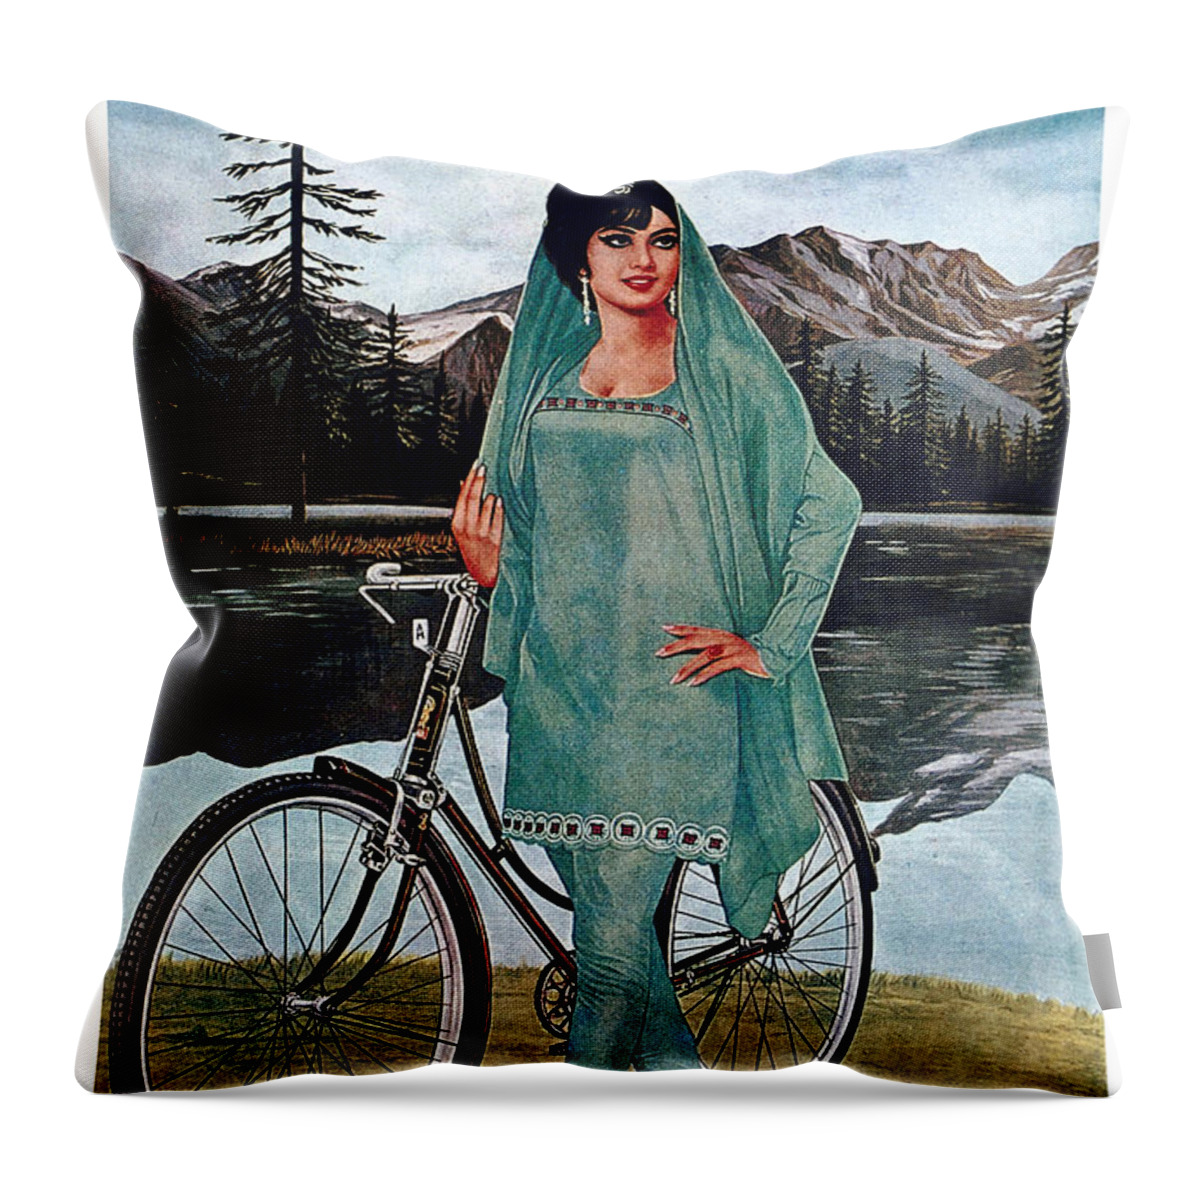 Vintage Throw Pillow featuring the mixed media Atlas Bicycle - India - Vintage Advertising Poster by Studio Grafiikka